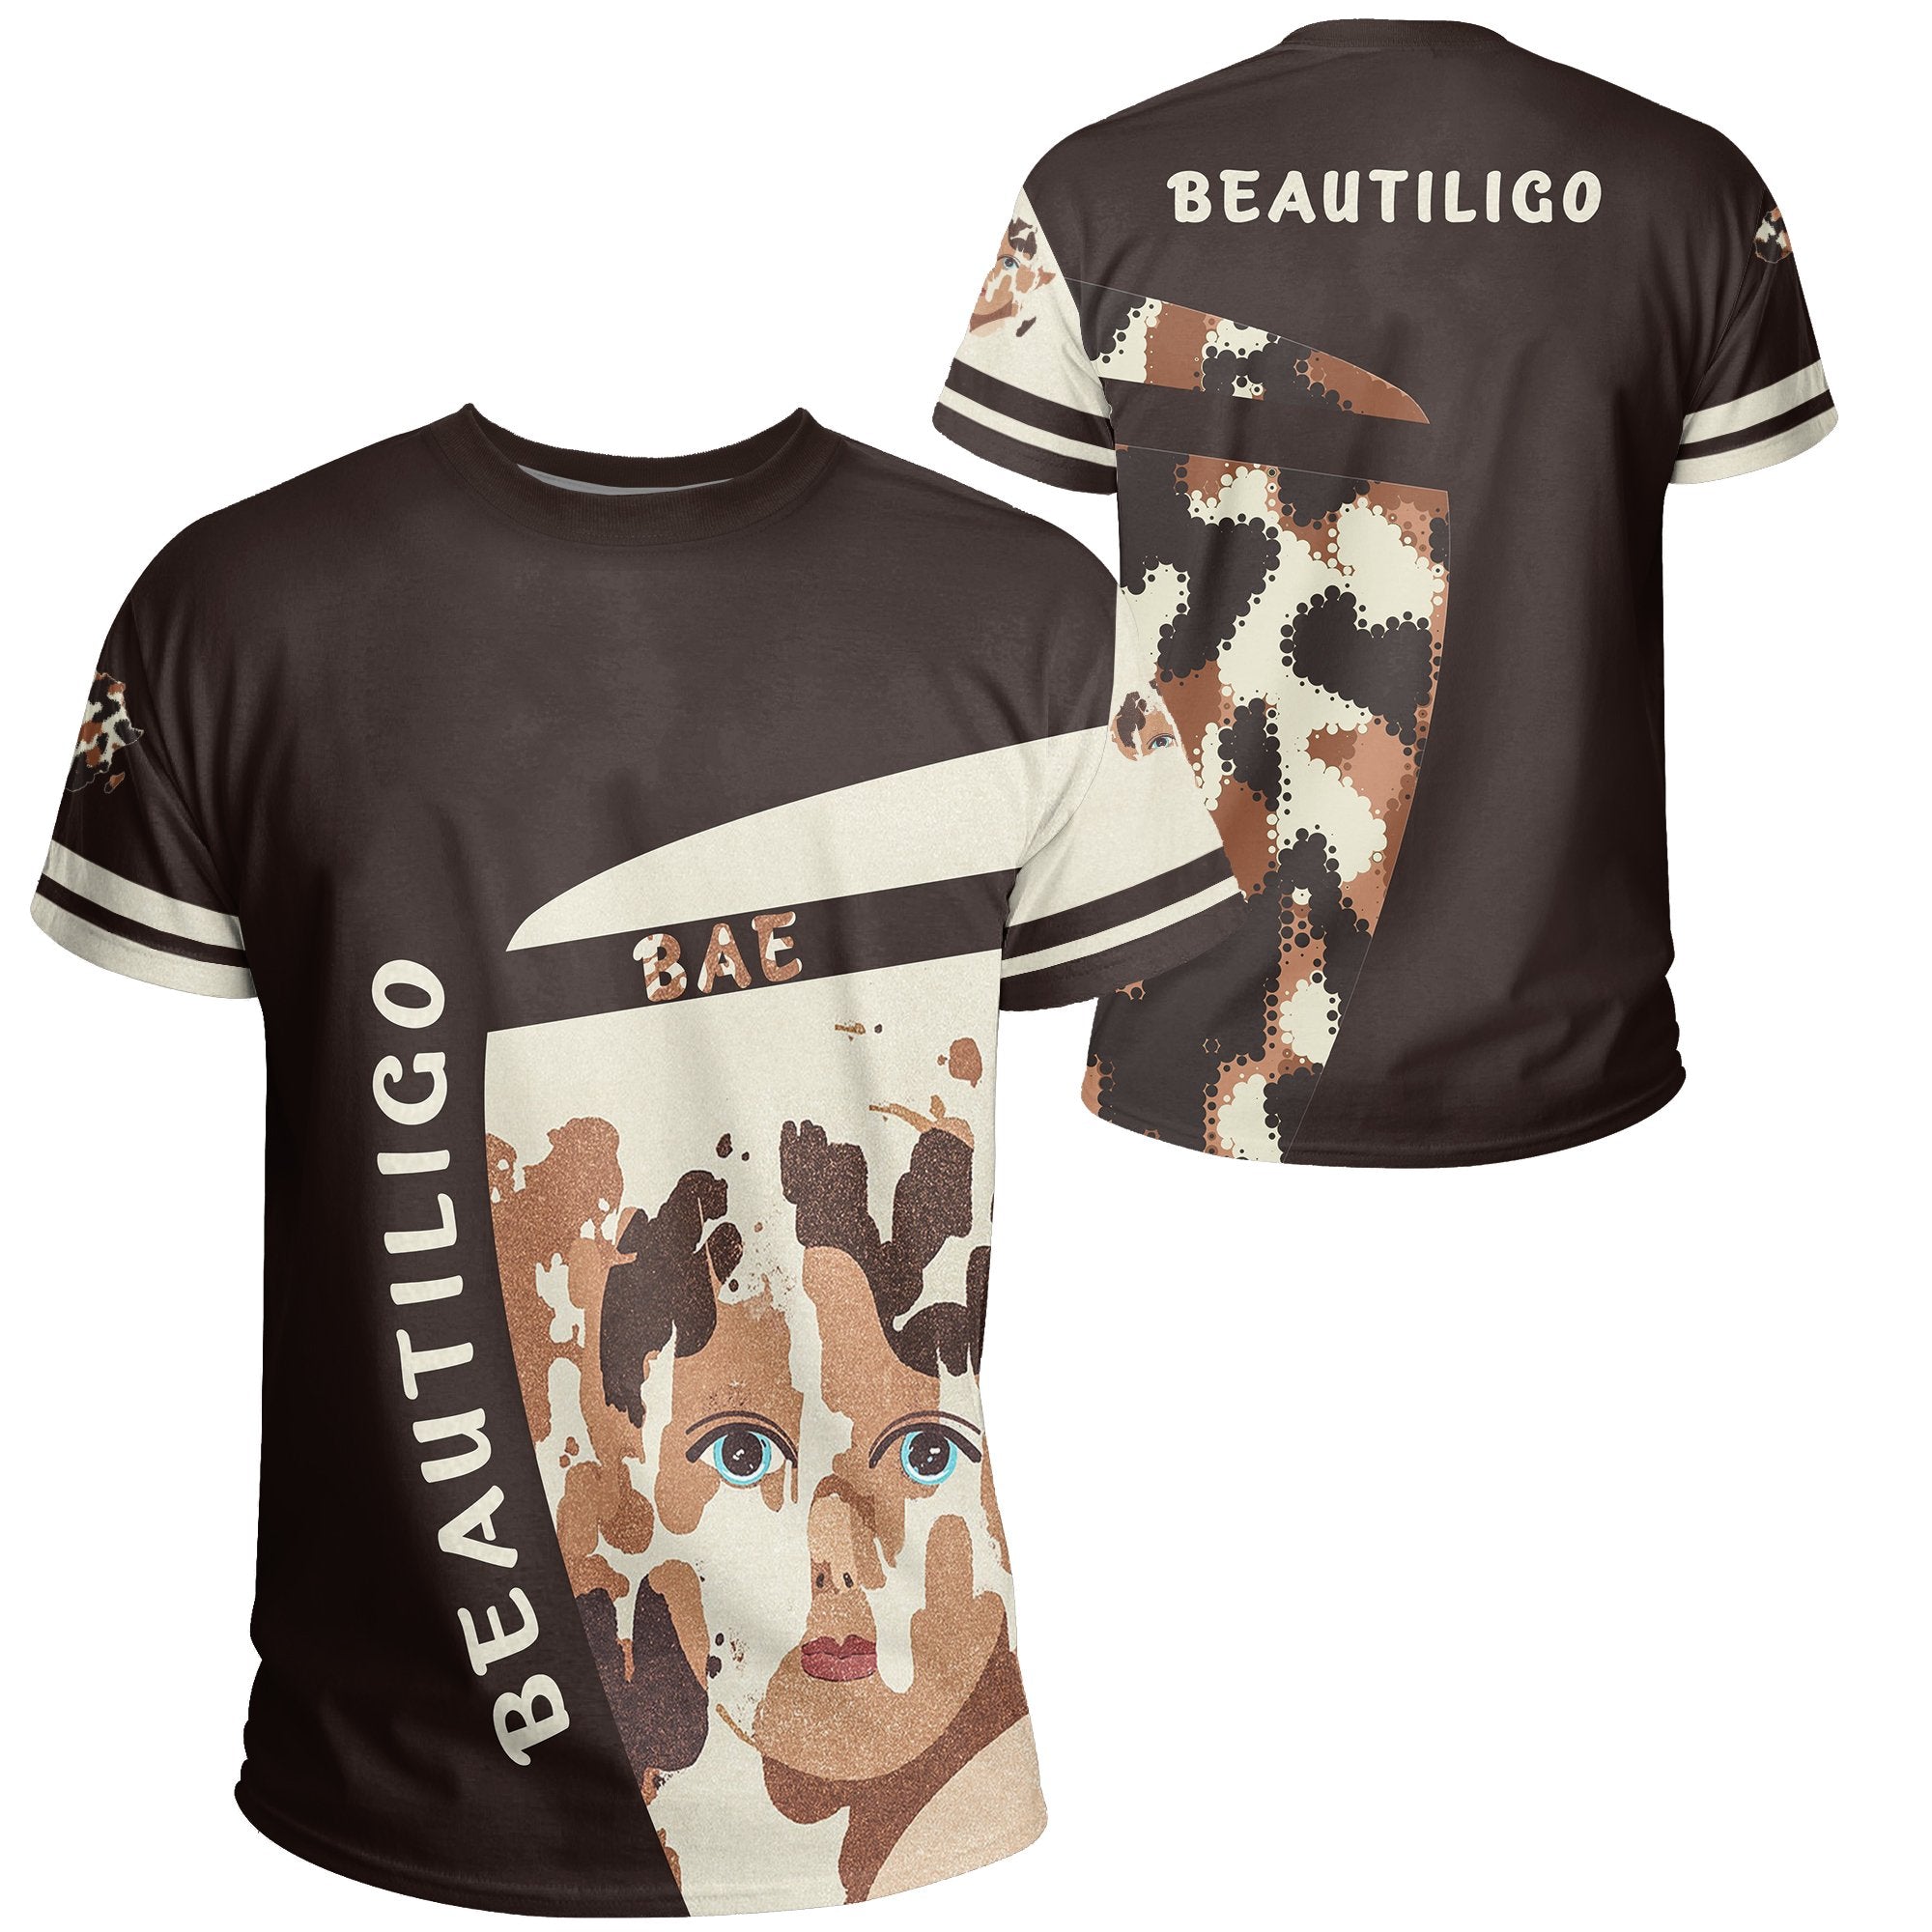 wonder-print-shop-t-shirt-vitiligo-cloth-beautiligo-bae-tee